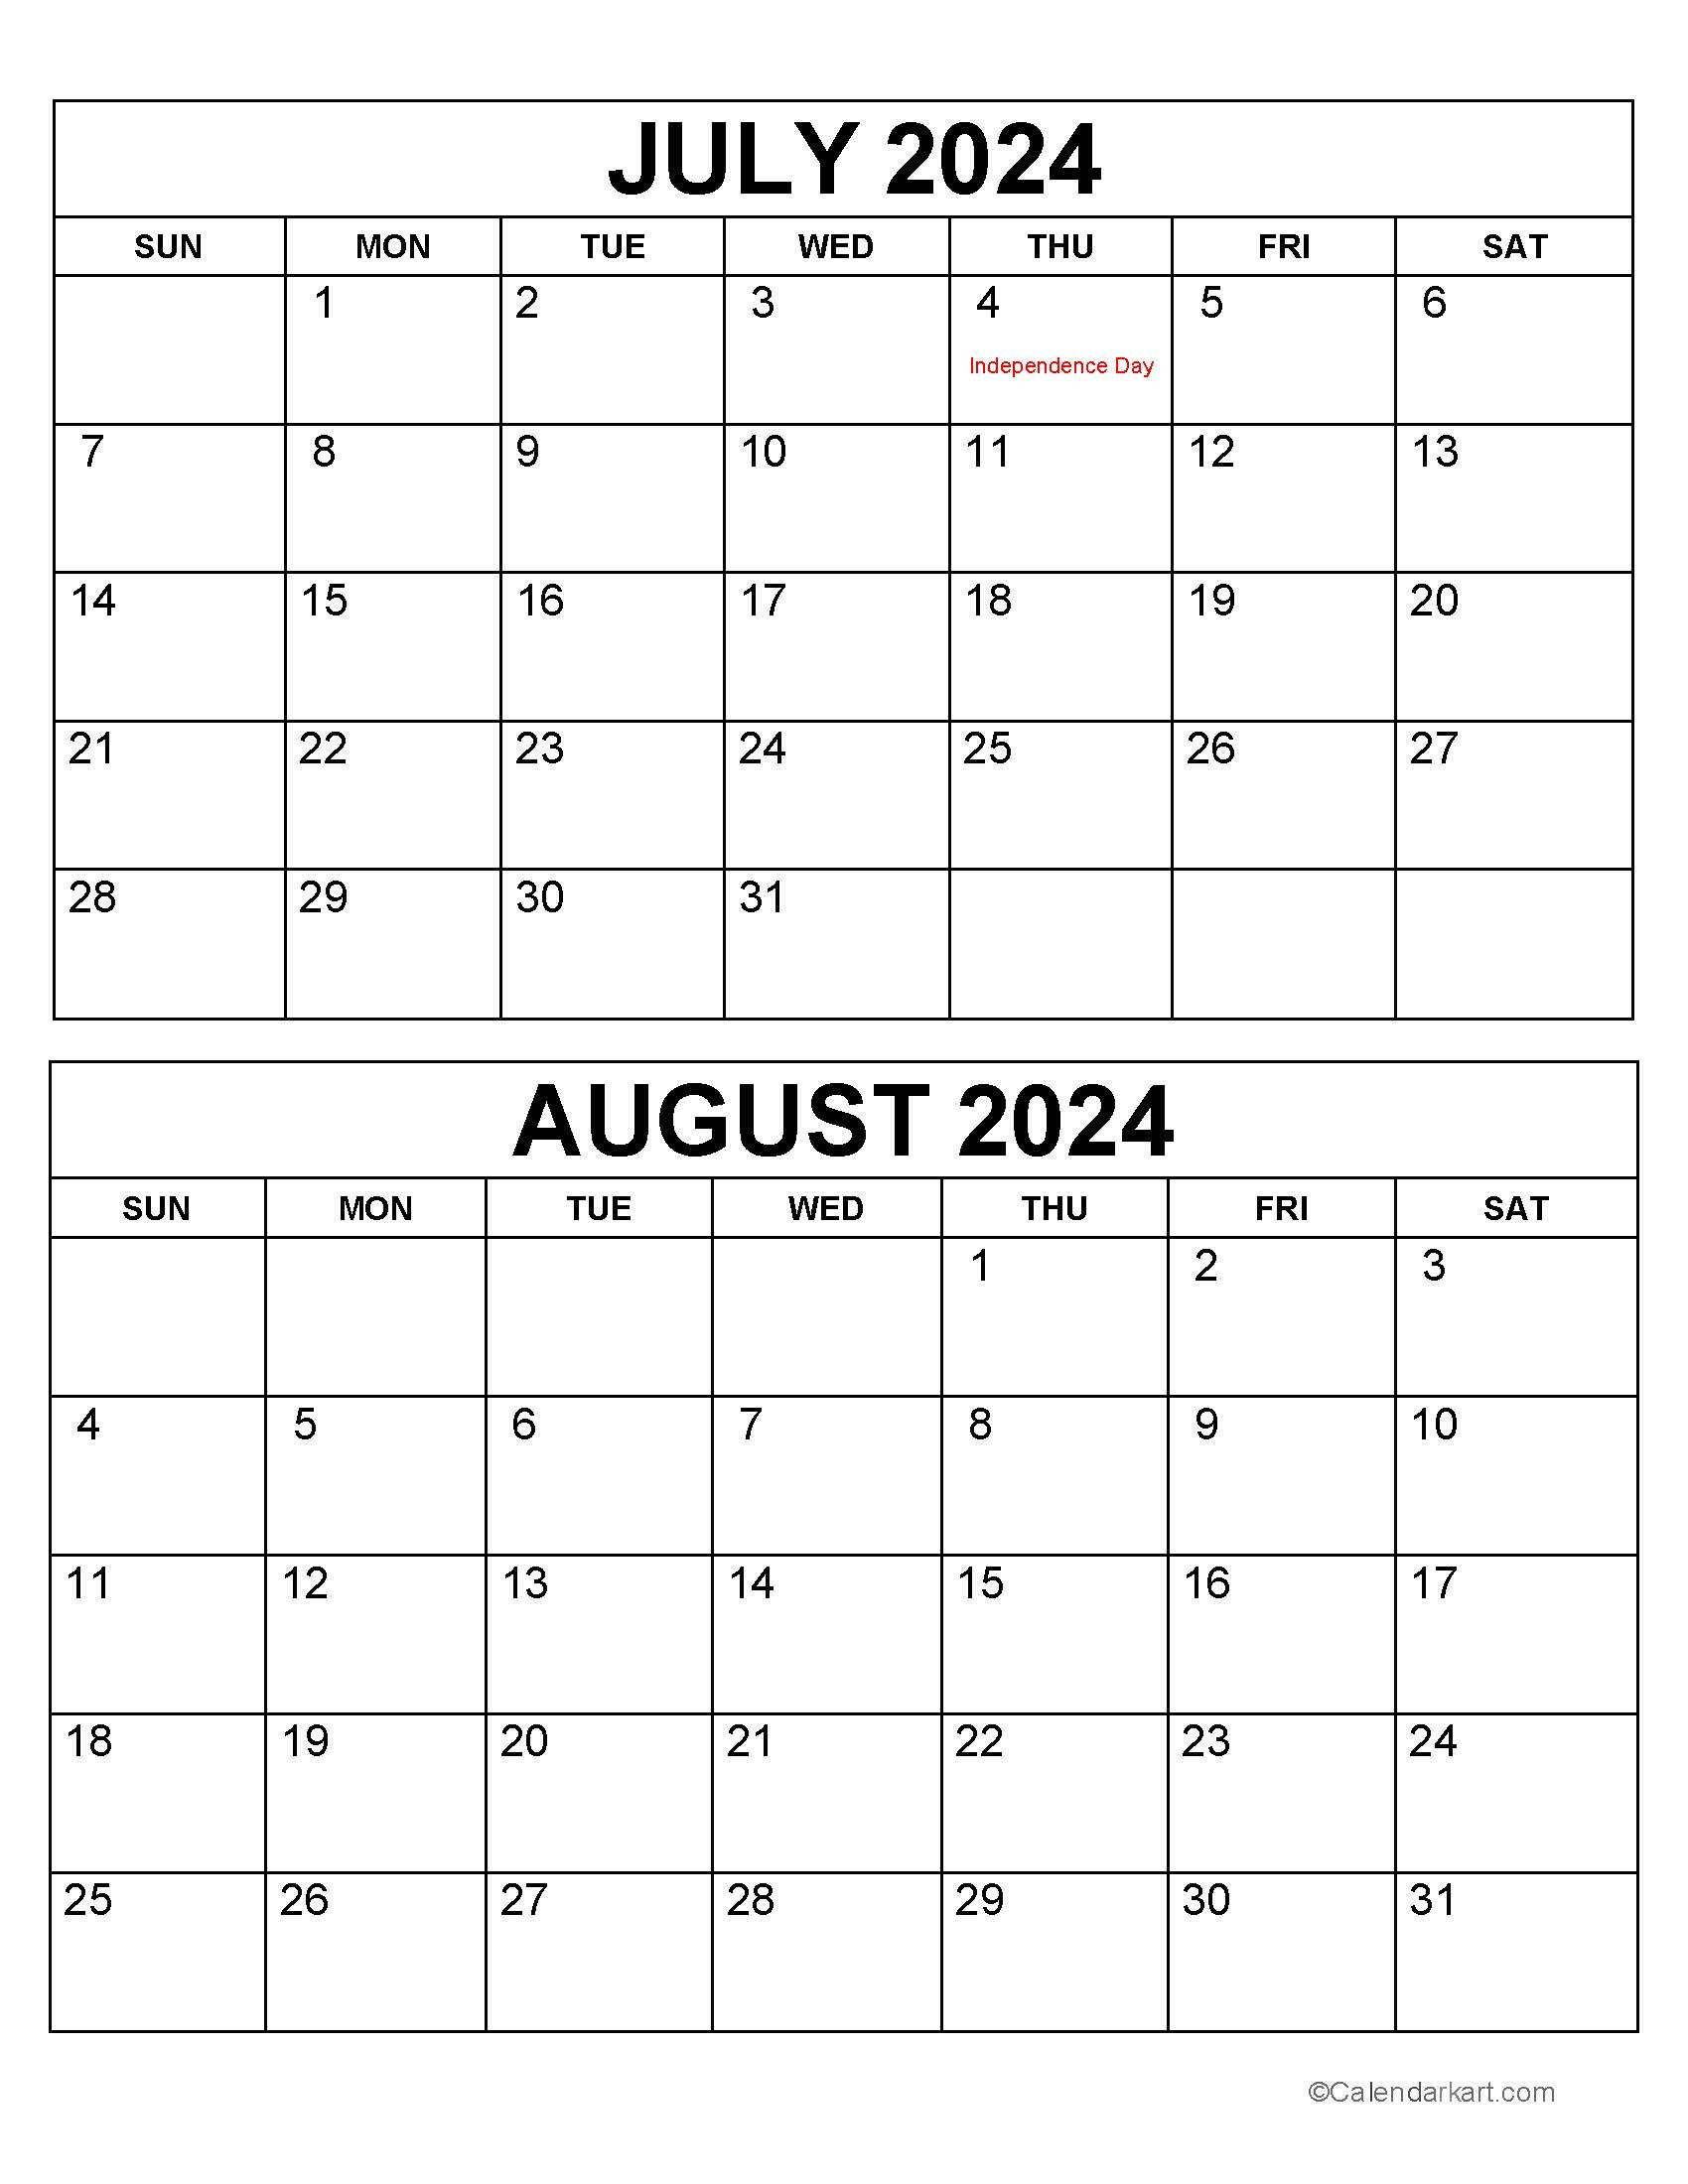 Printable July August 2024 Calendar | Calendarkart with July and August 2024 Calendar Printable